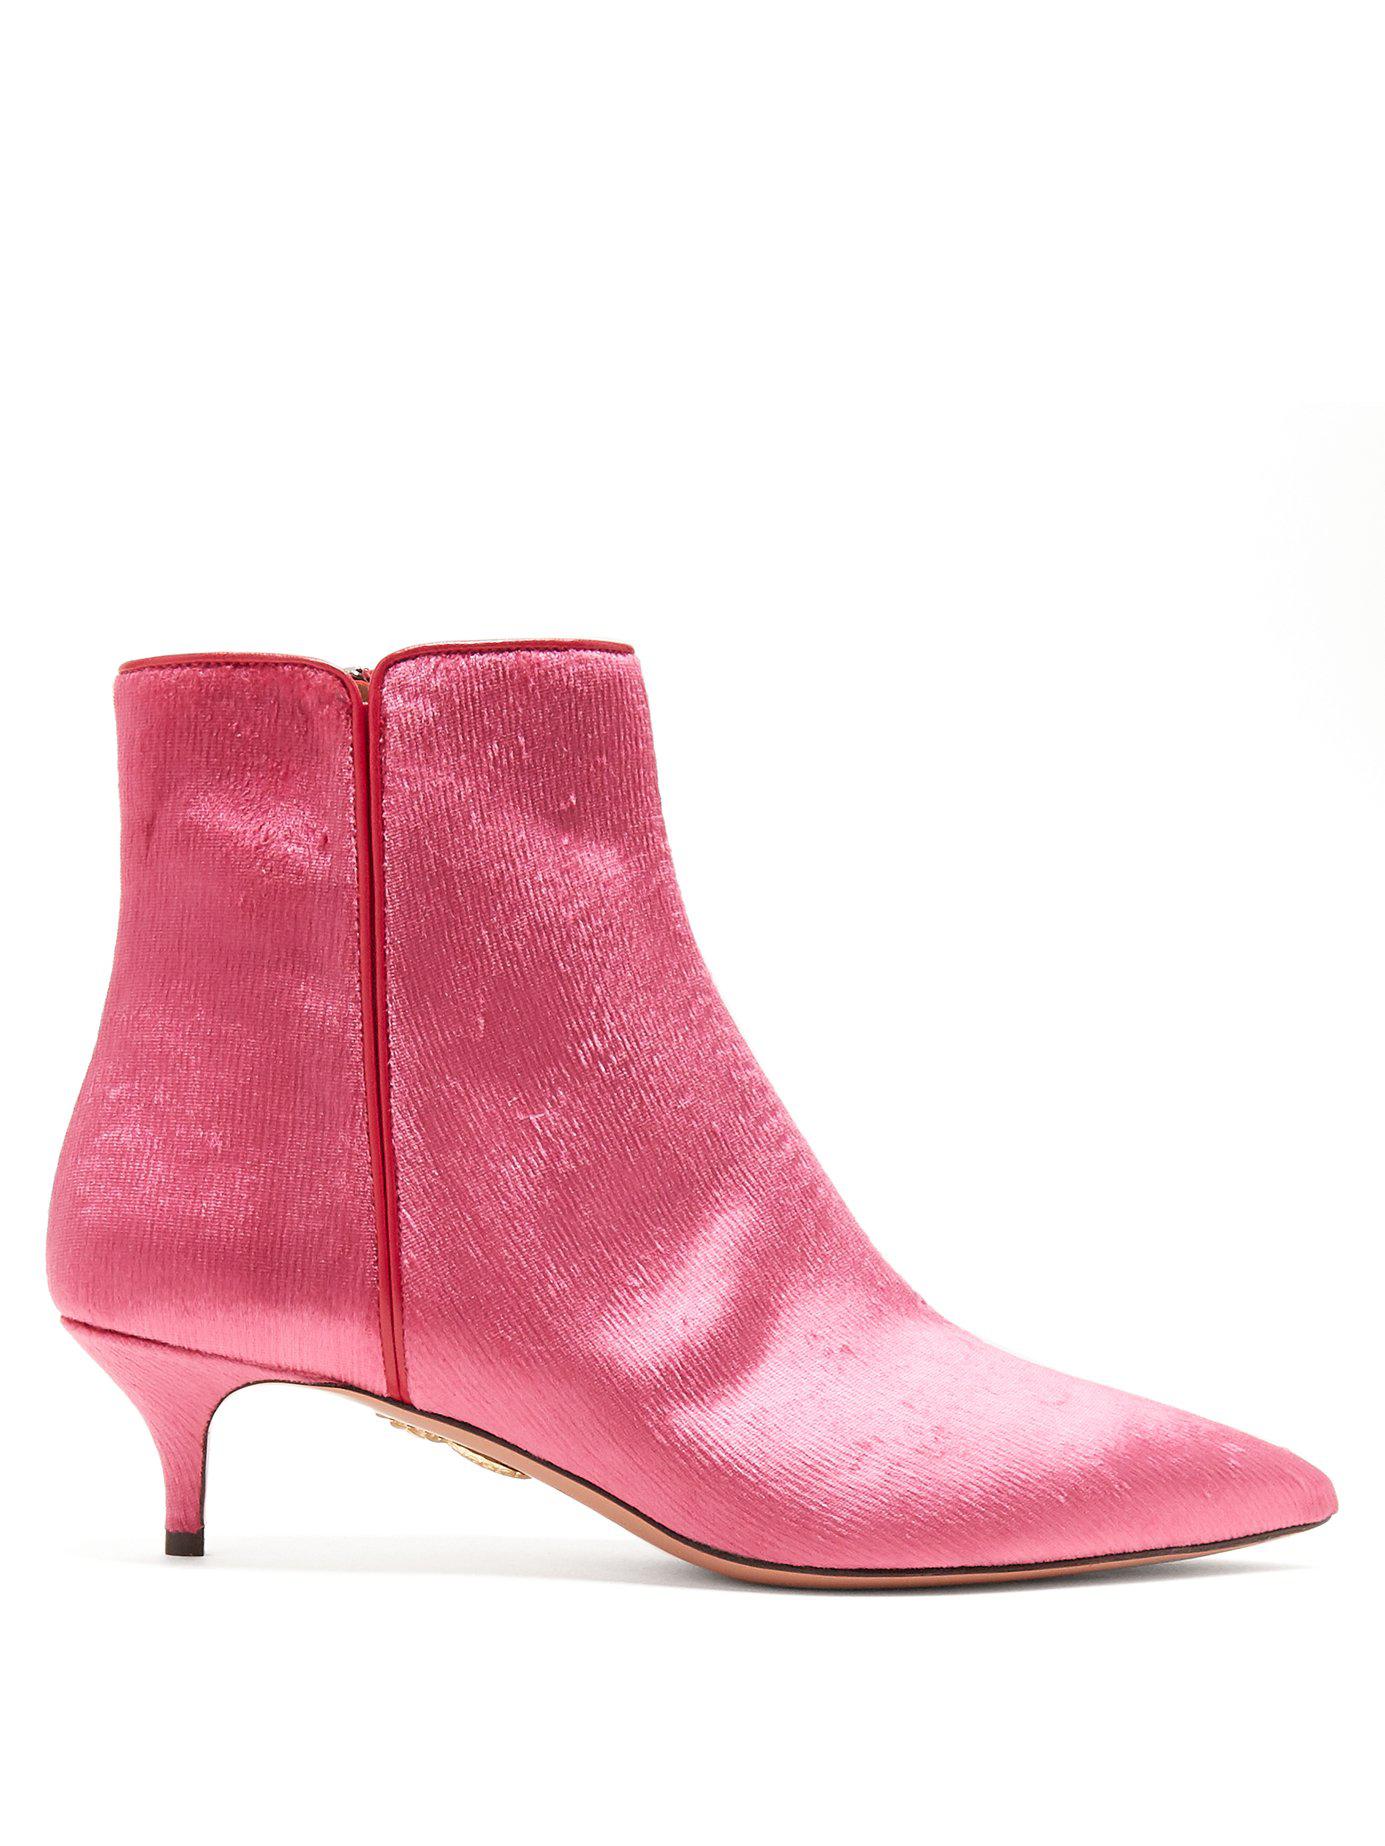 Aquazzura Quant 45 Velvet Ankle Boots in Pink - Lyst